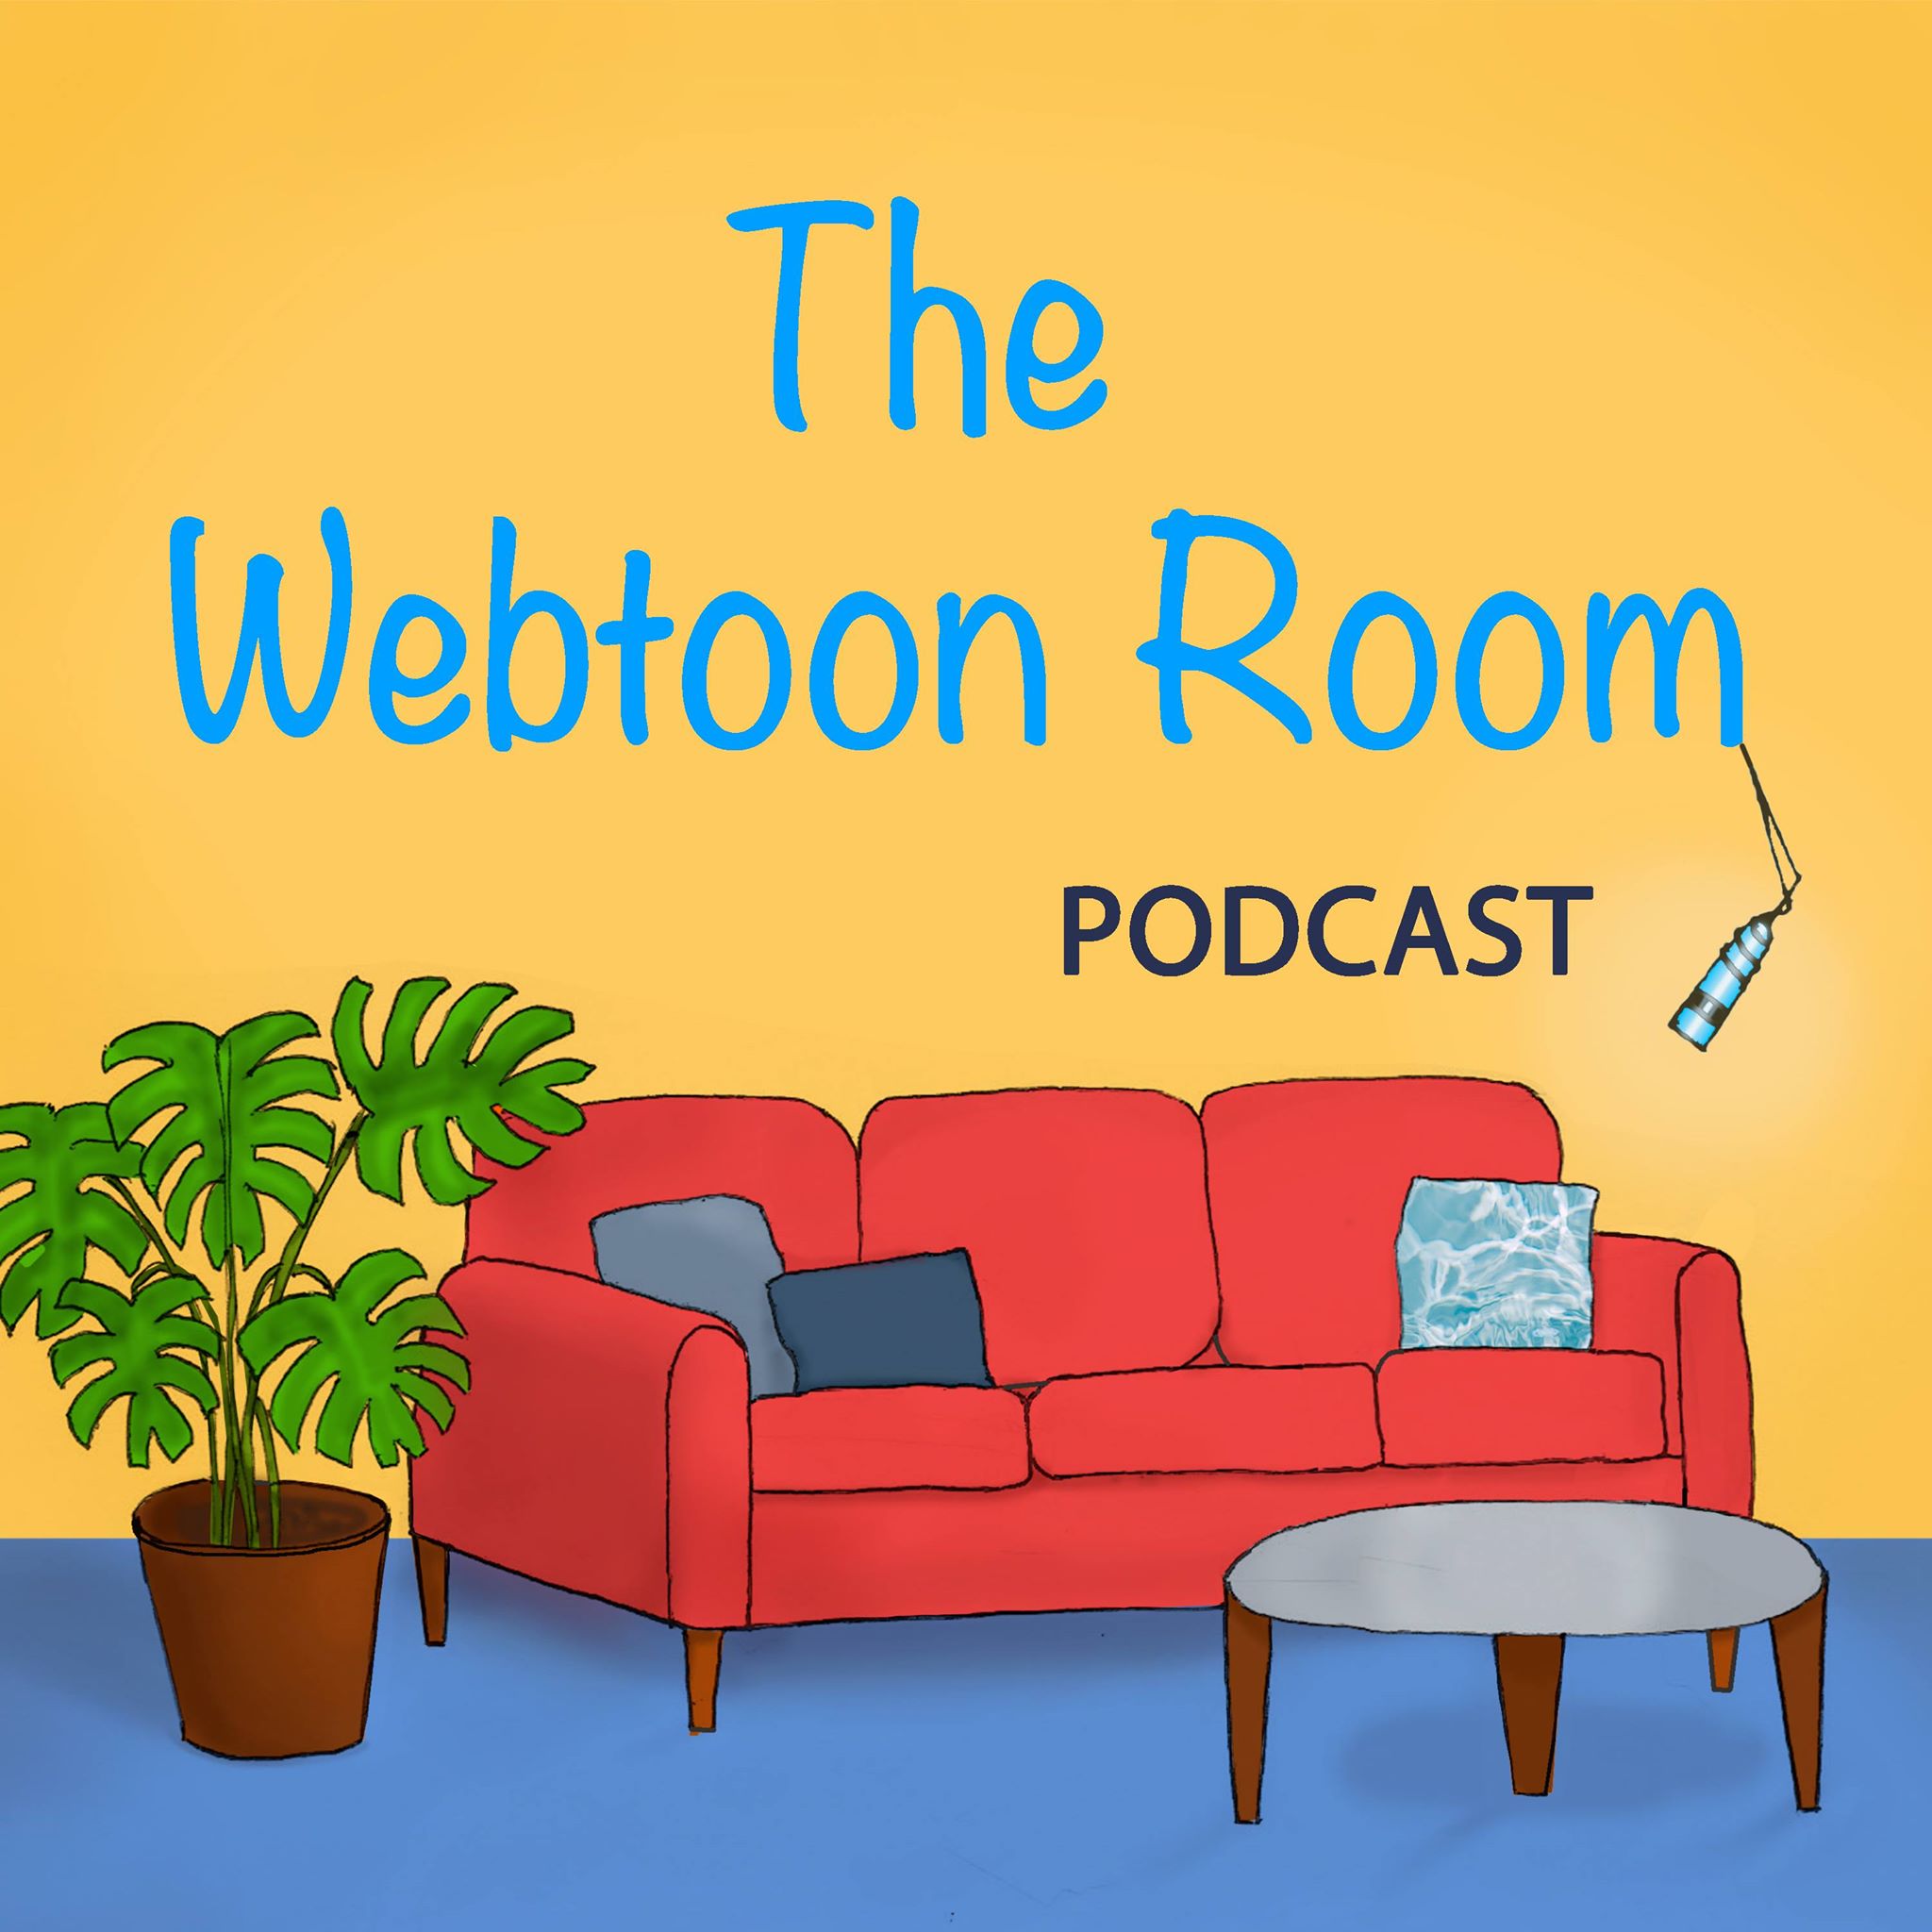 The Webtoon Room Podcast